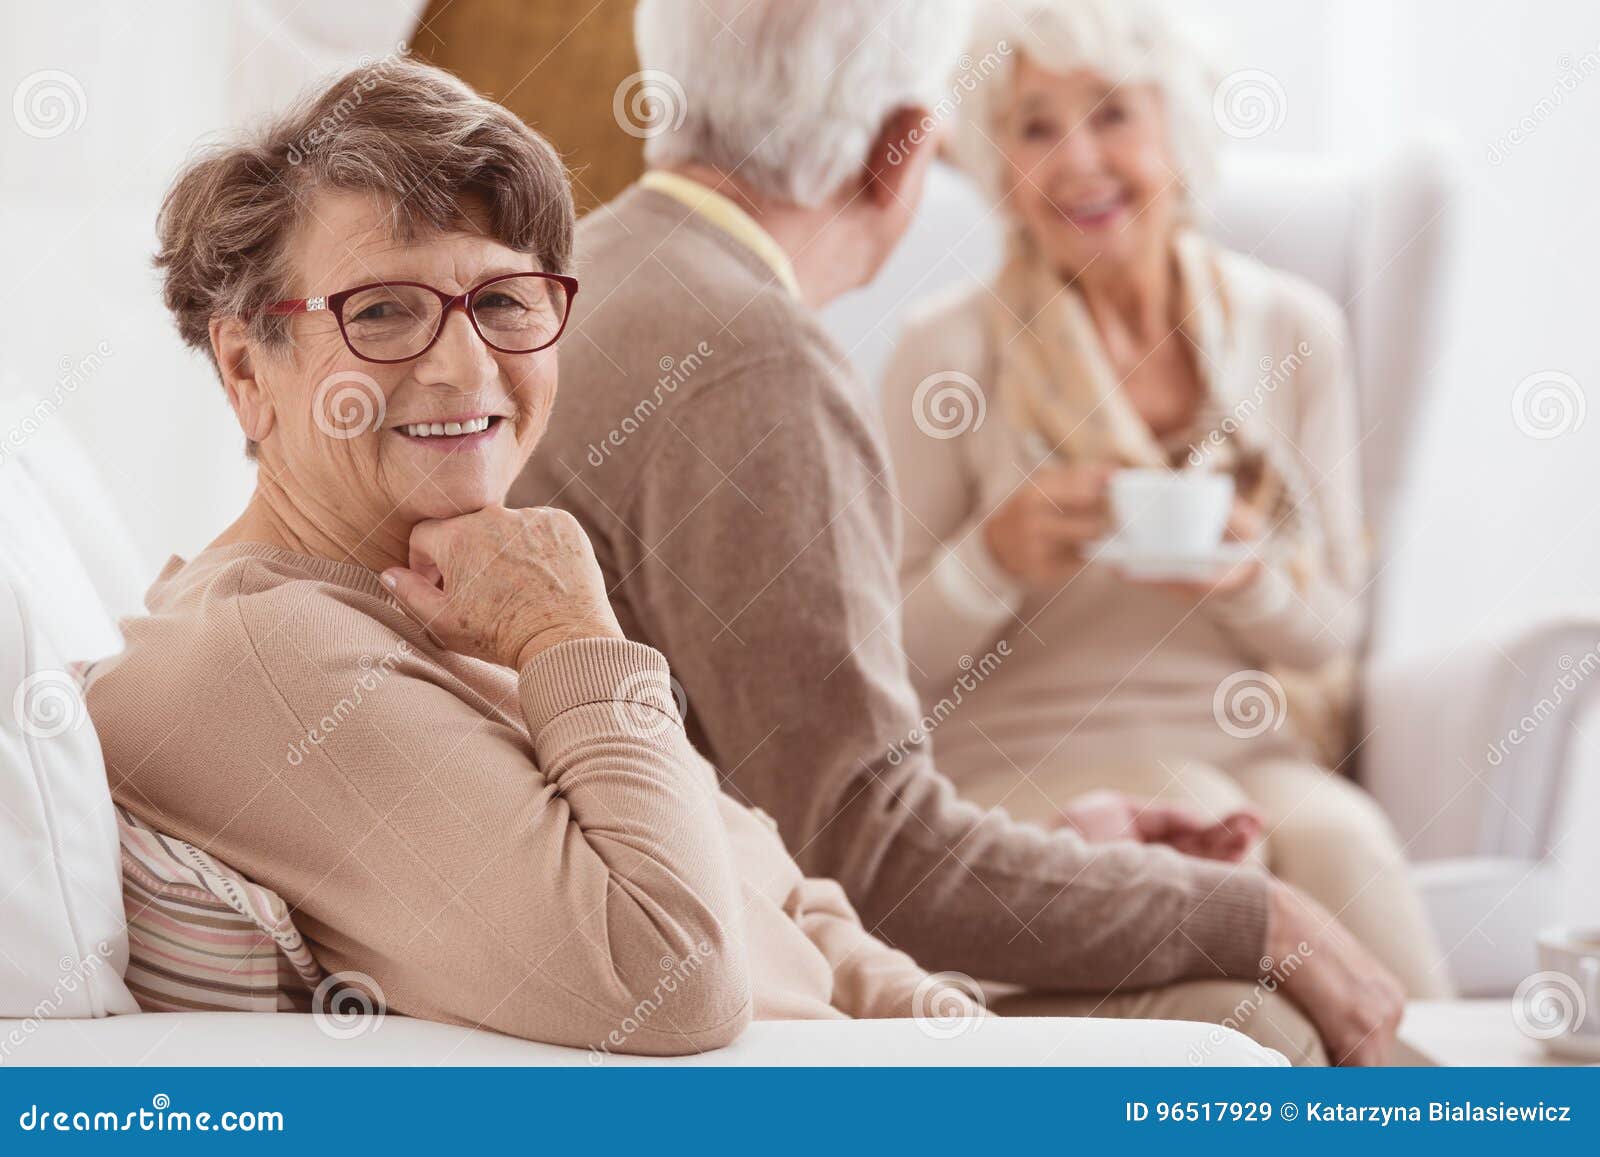 happy elderly lady